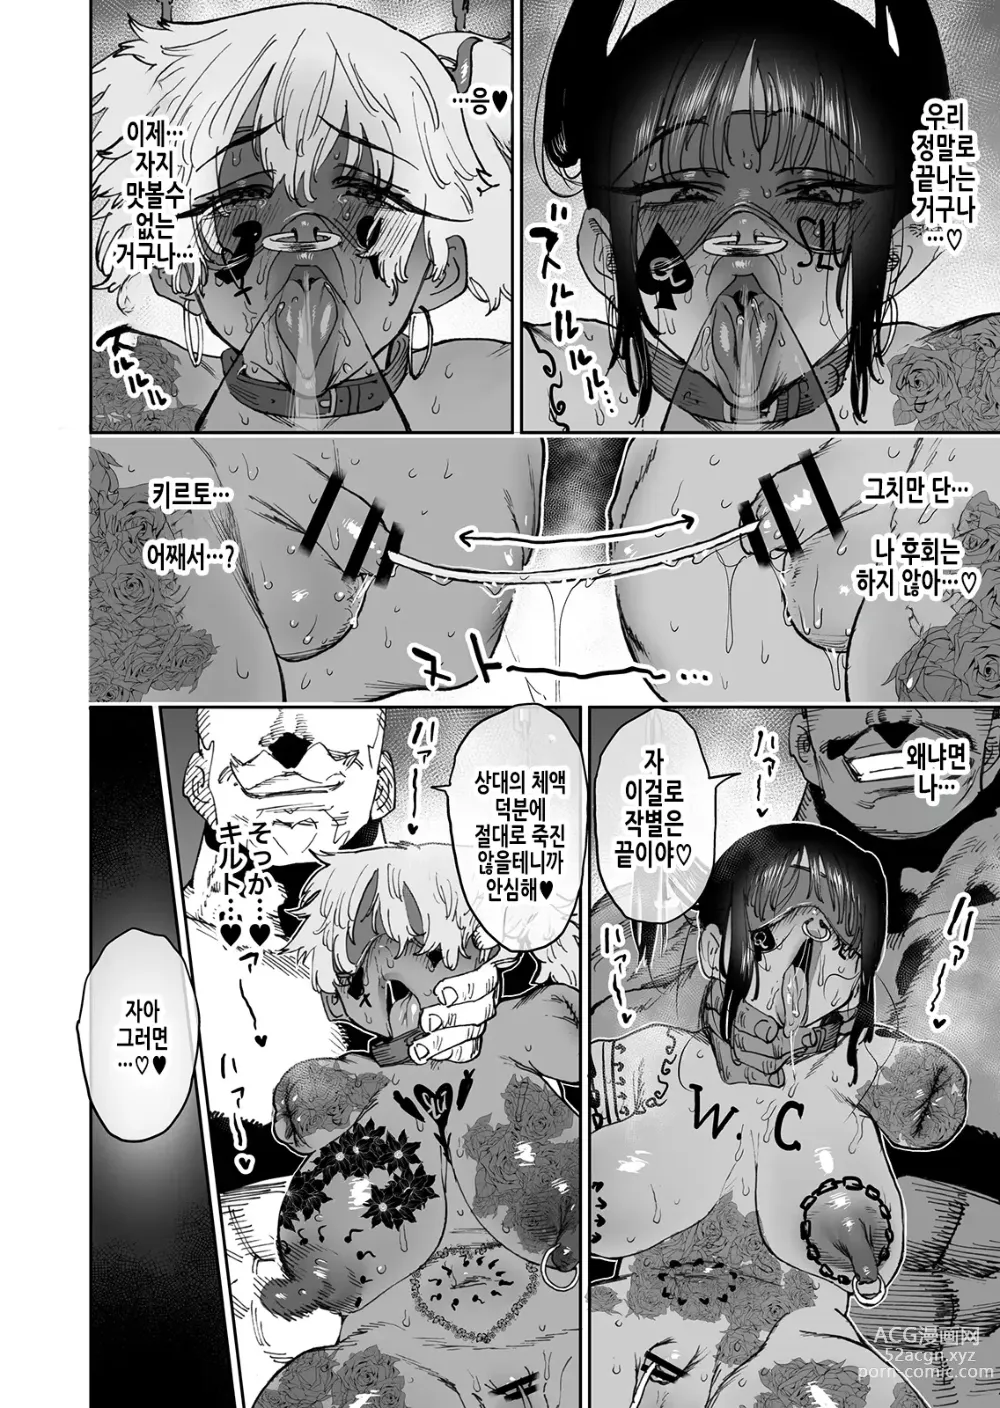 Page 94 of doujinshi 강해질 것을 맹세하고 해어진 전우 둘이 2년후에 암컷오나홀이 되어 재회하는 이야기